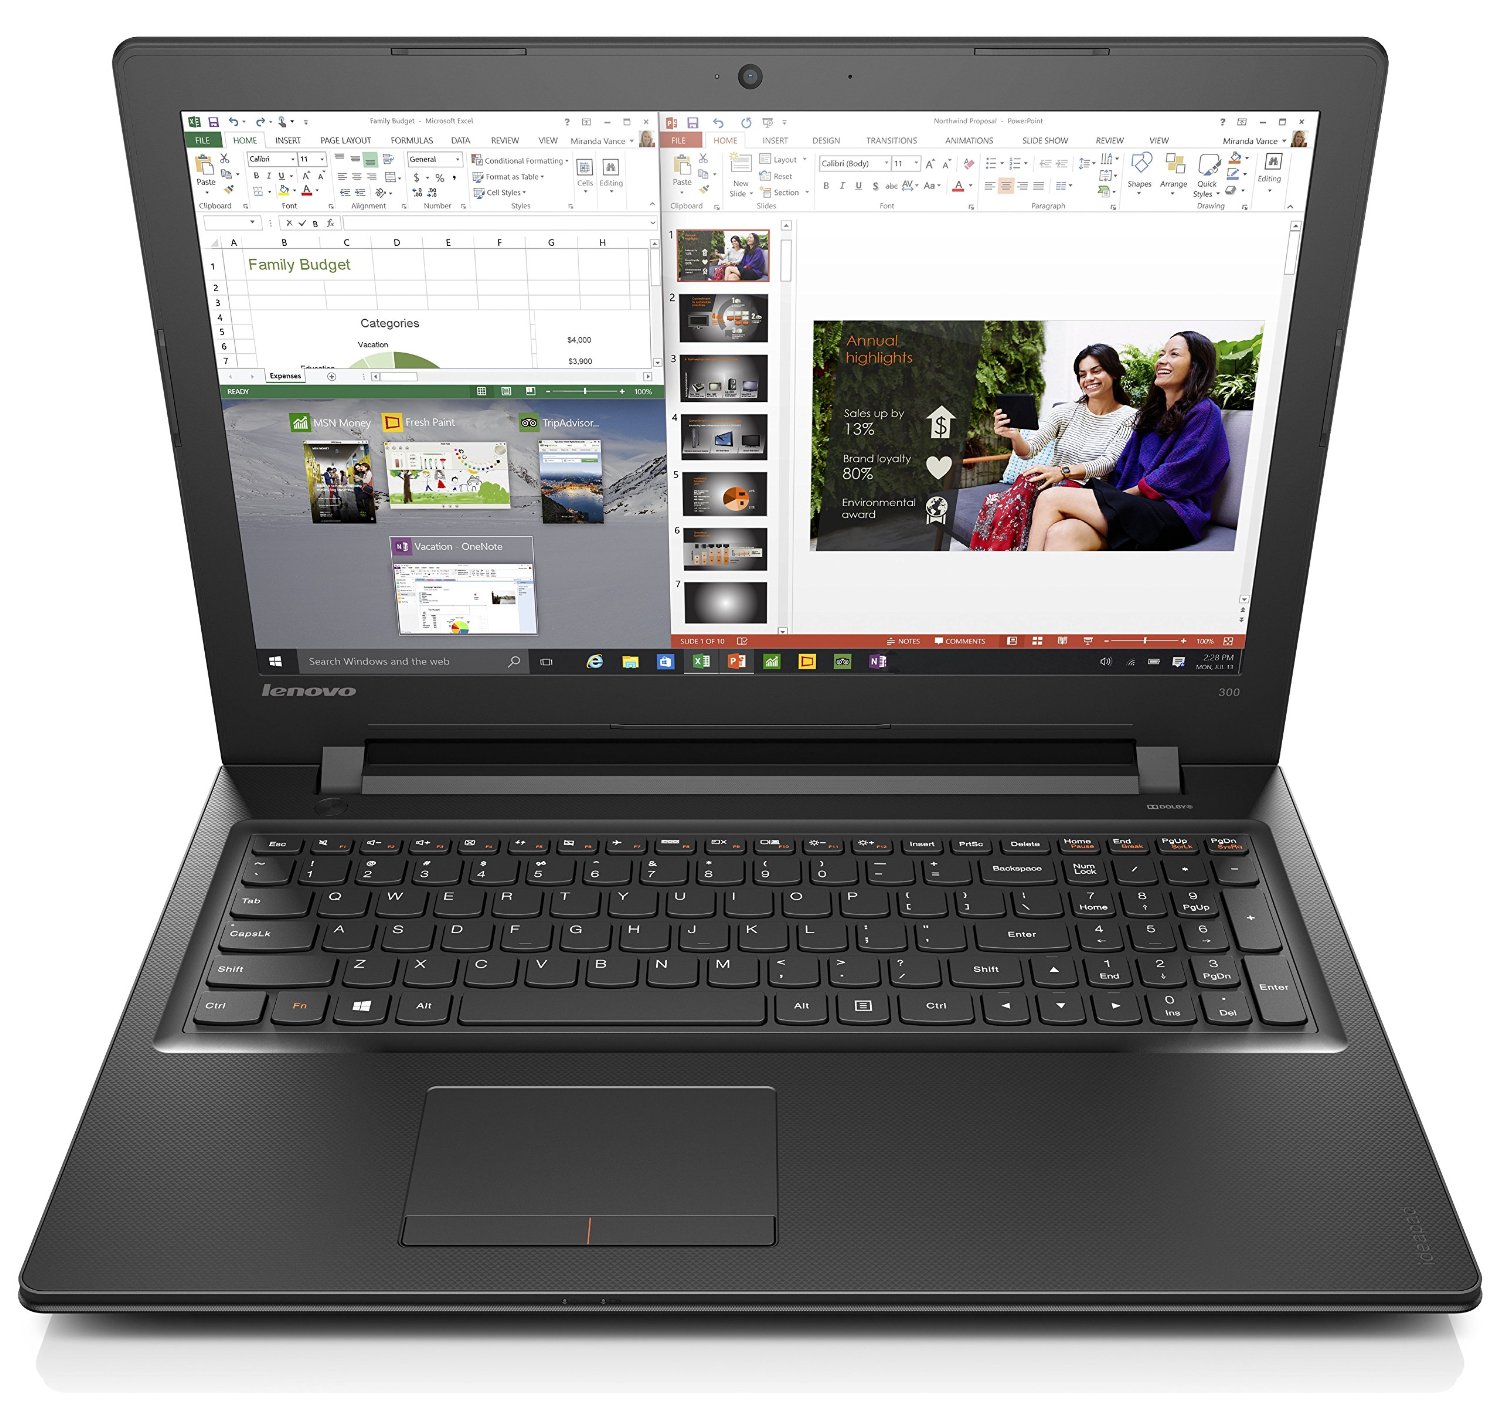 Lenovo Ideapad 300 15.6-Inch HD Laptop (Black) - (Intel Core i7-6500U, 8 GB RAM, 1 TB HDD, Intel HD Graphics Card, Windows 10)